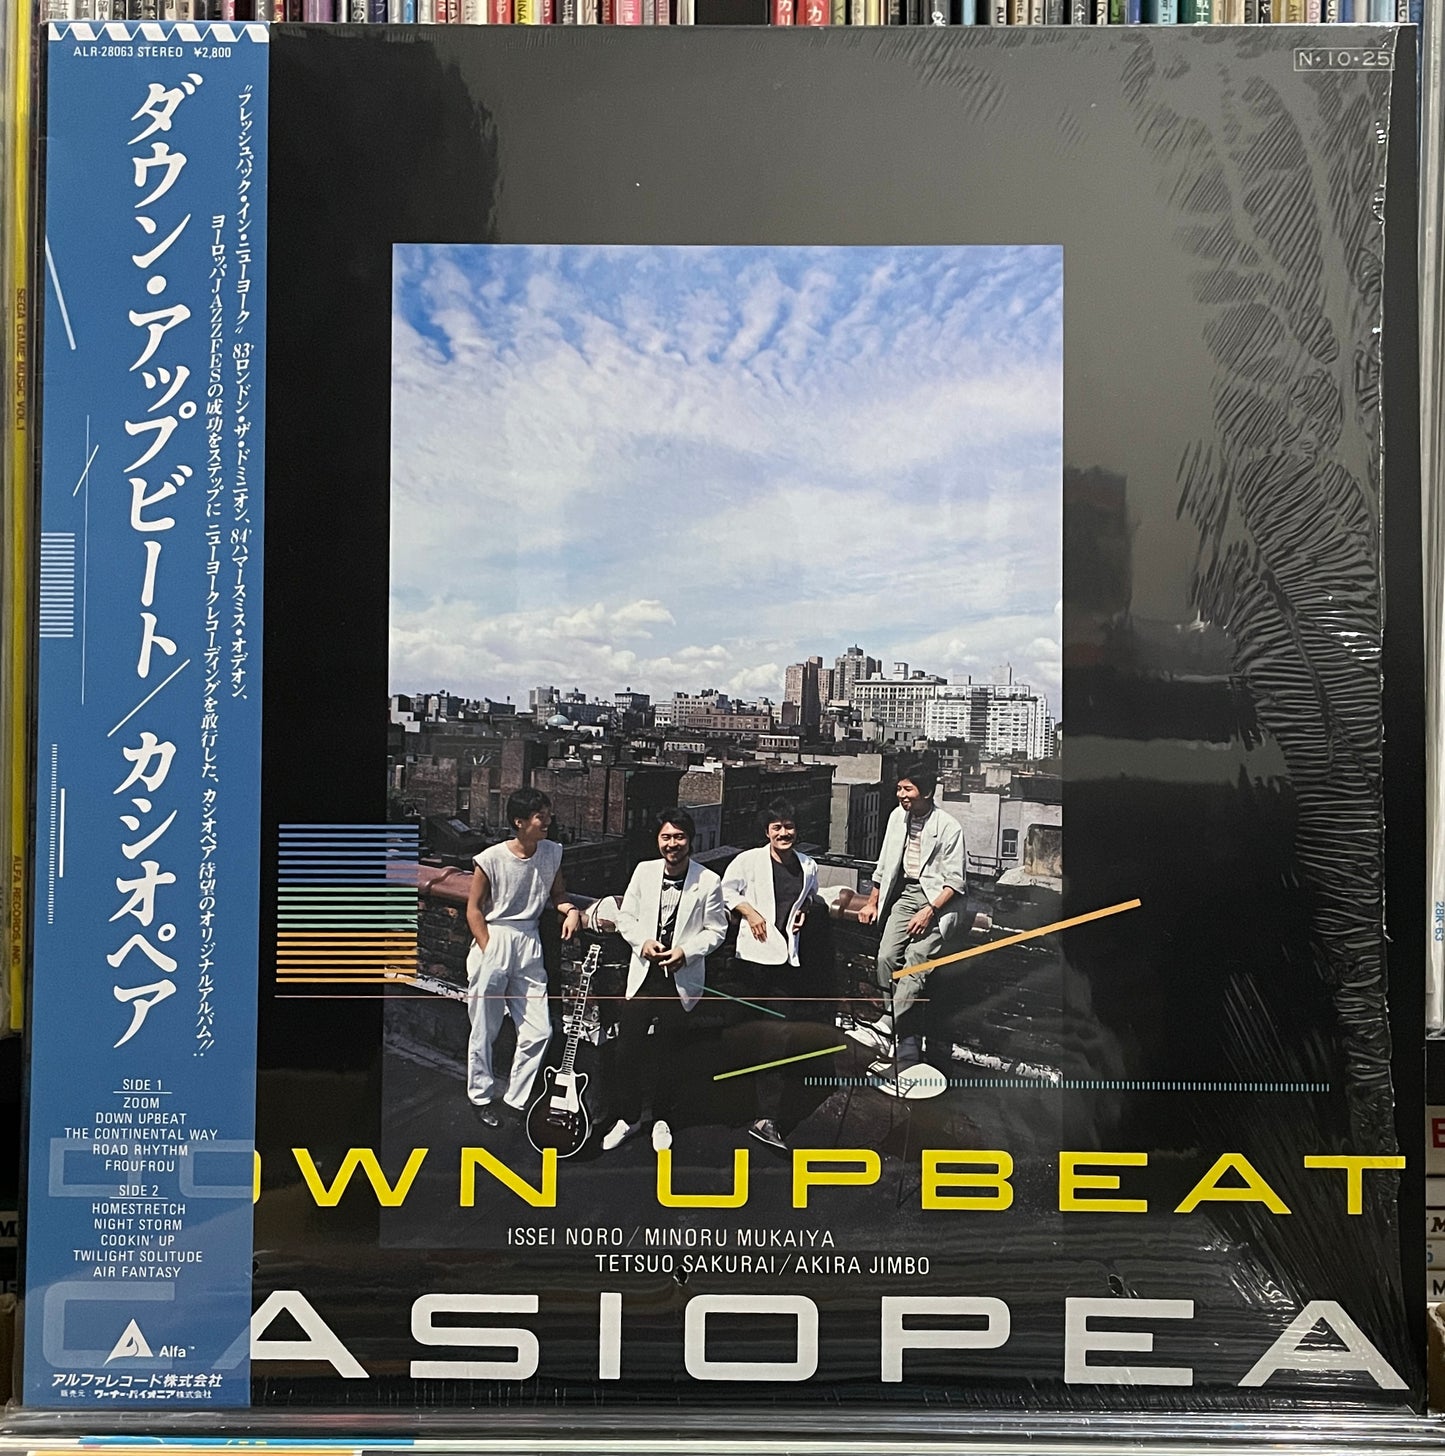 Casiopea “Down Upbeat” (1984)